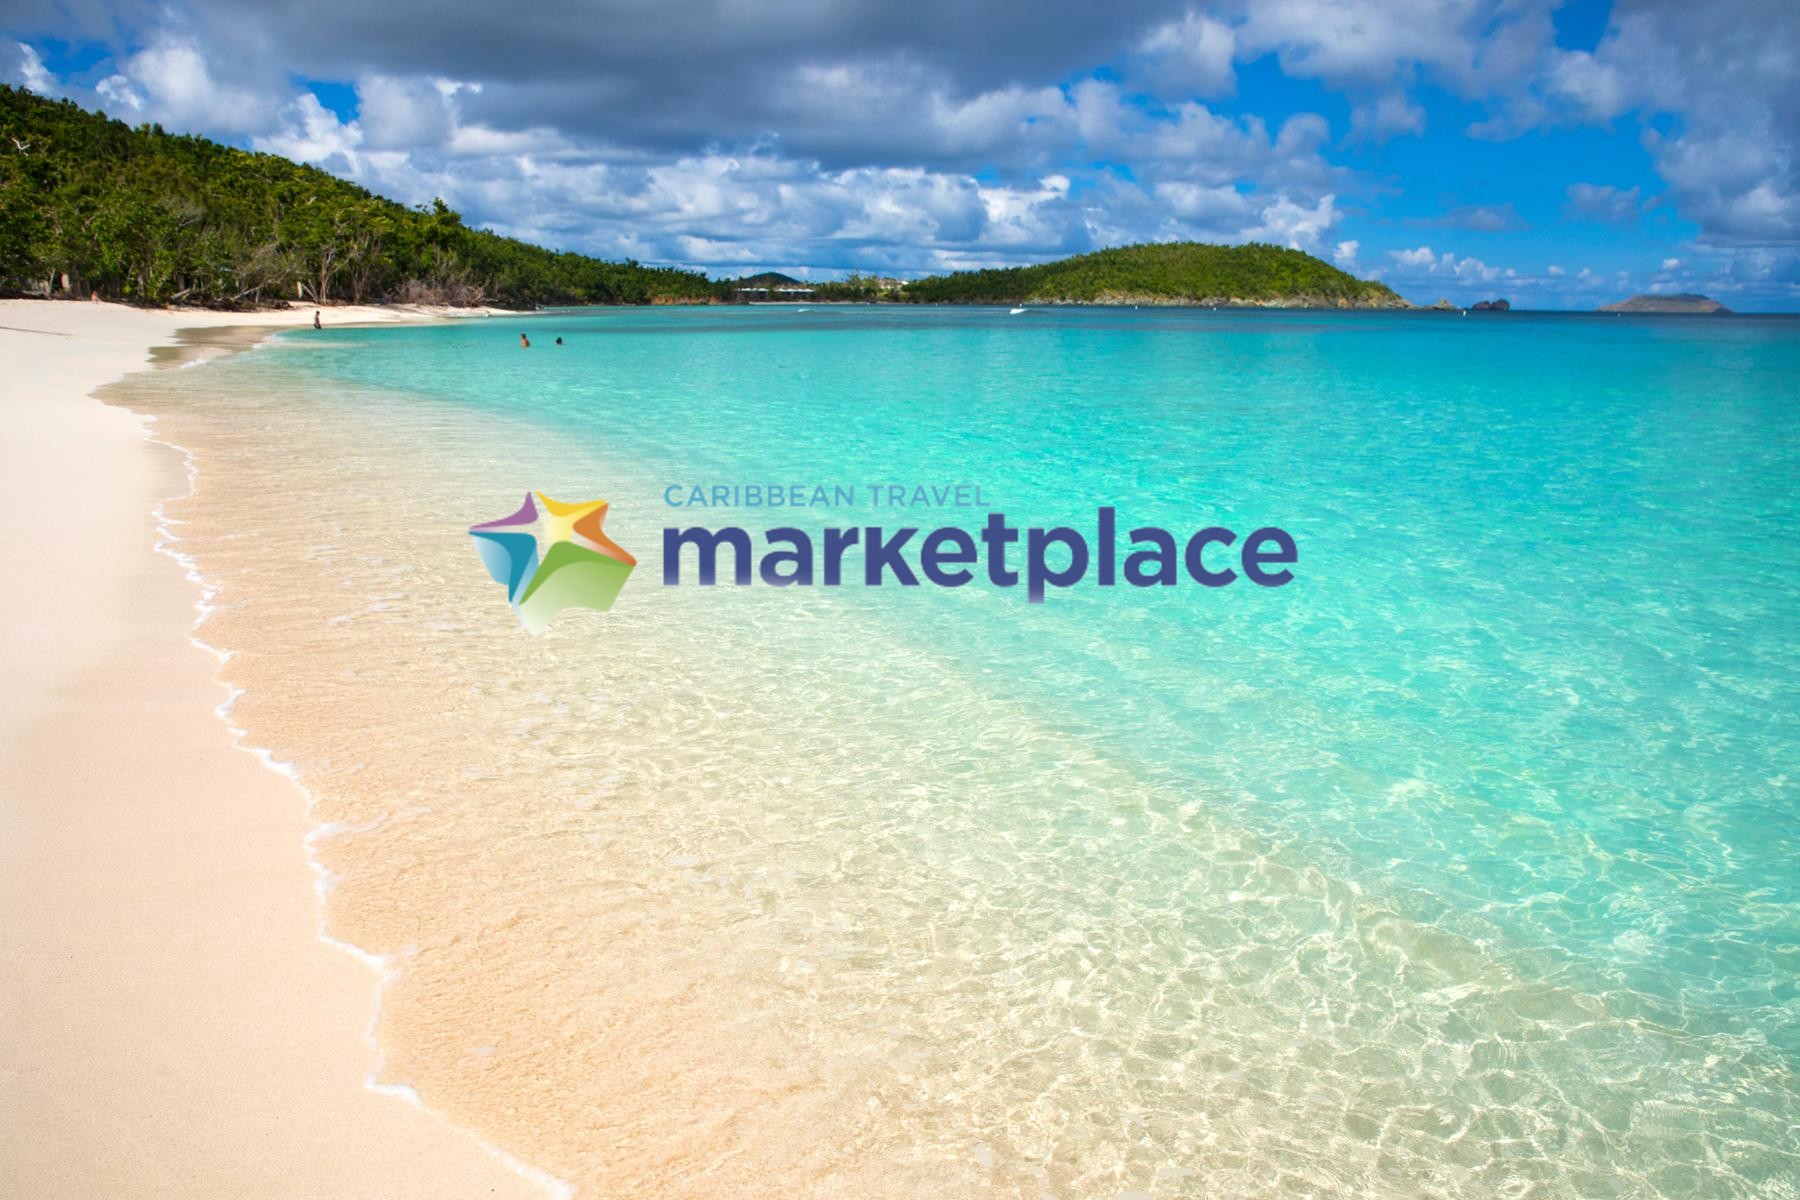 Caribbean Travel Marketplace